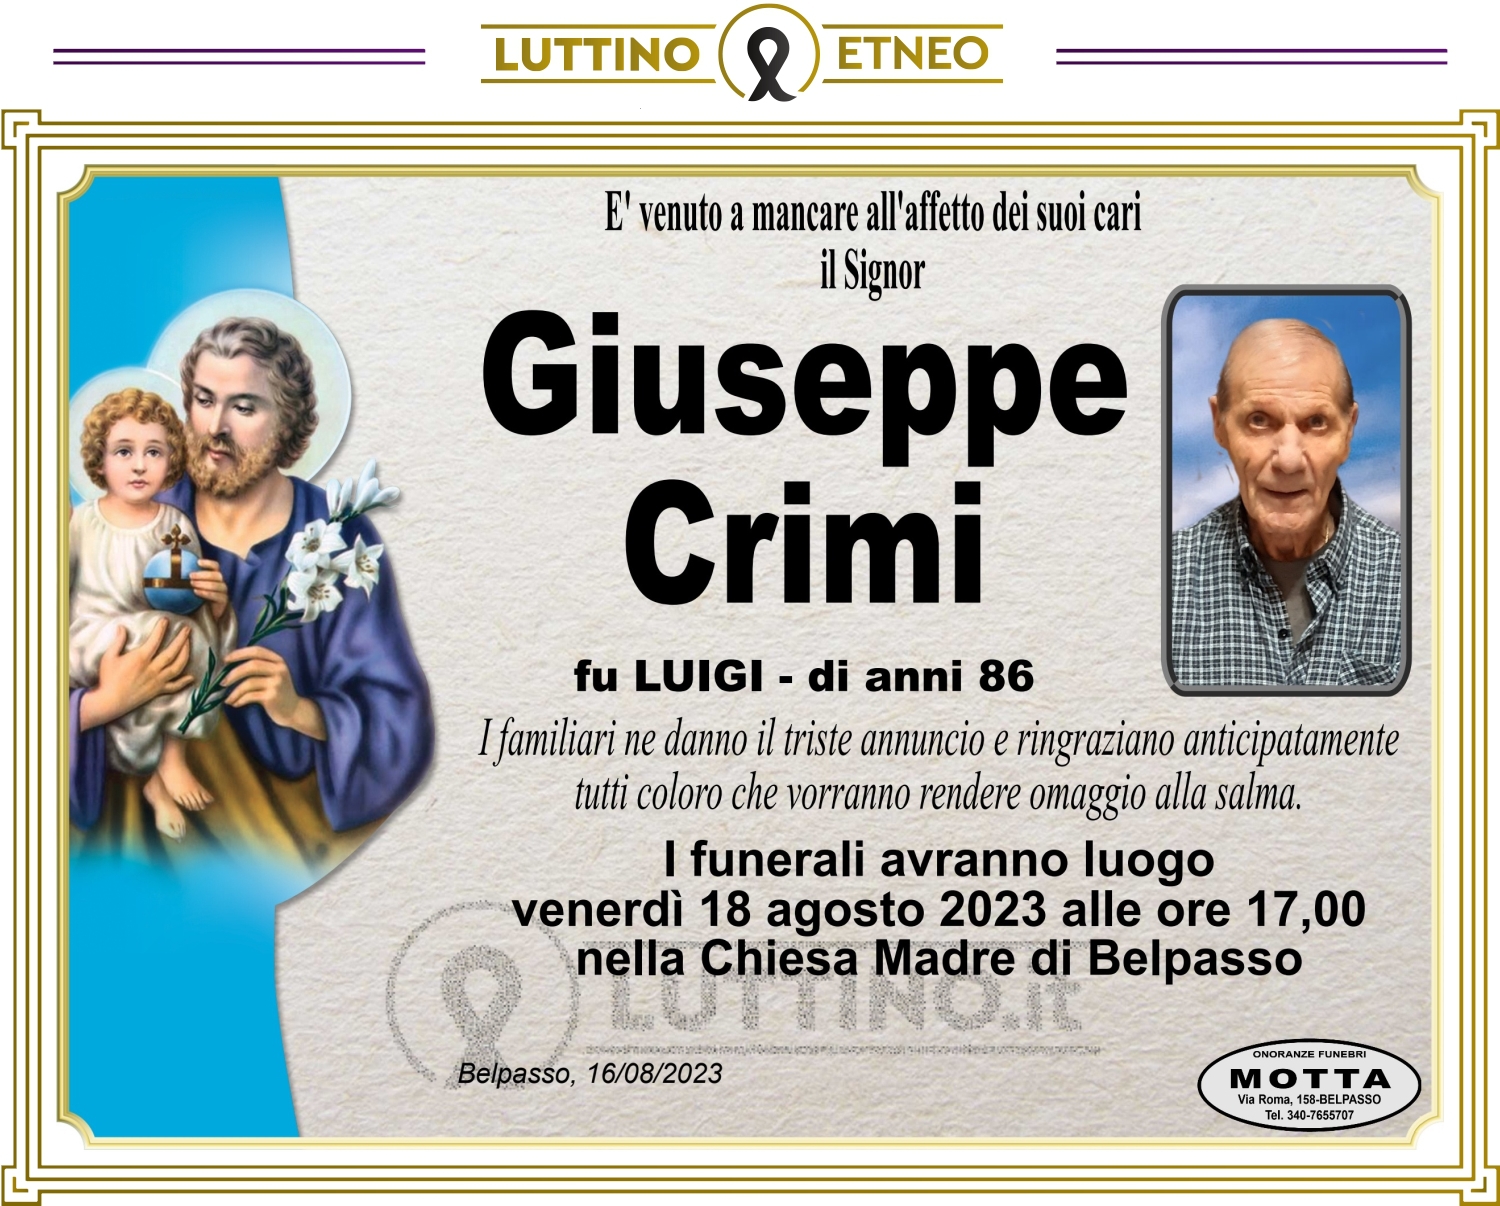 Giuseppe Crimi